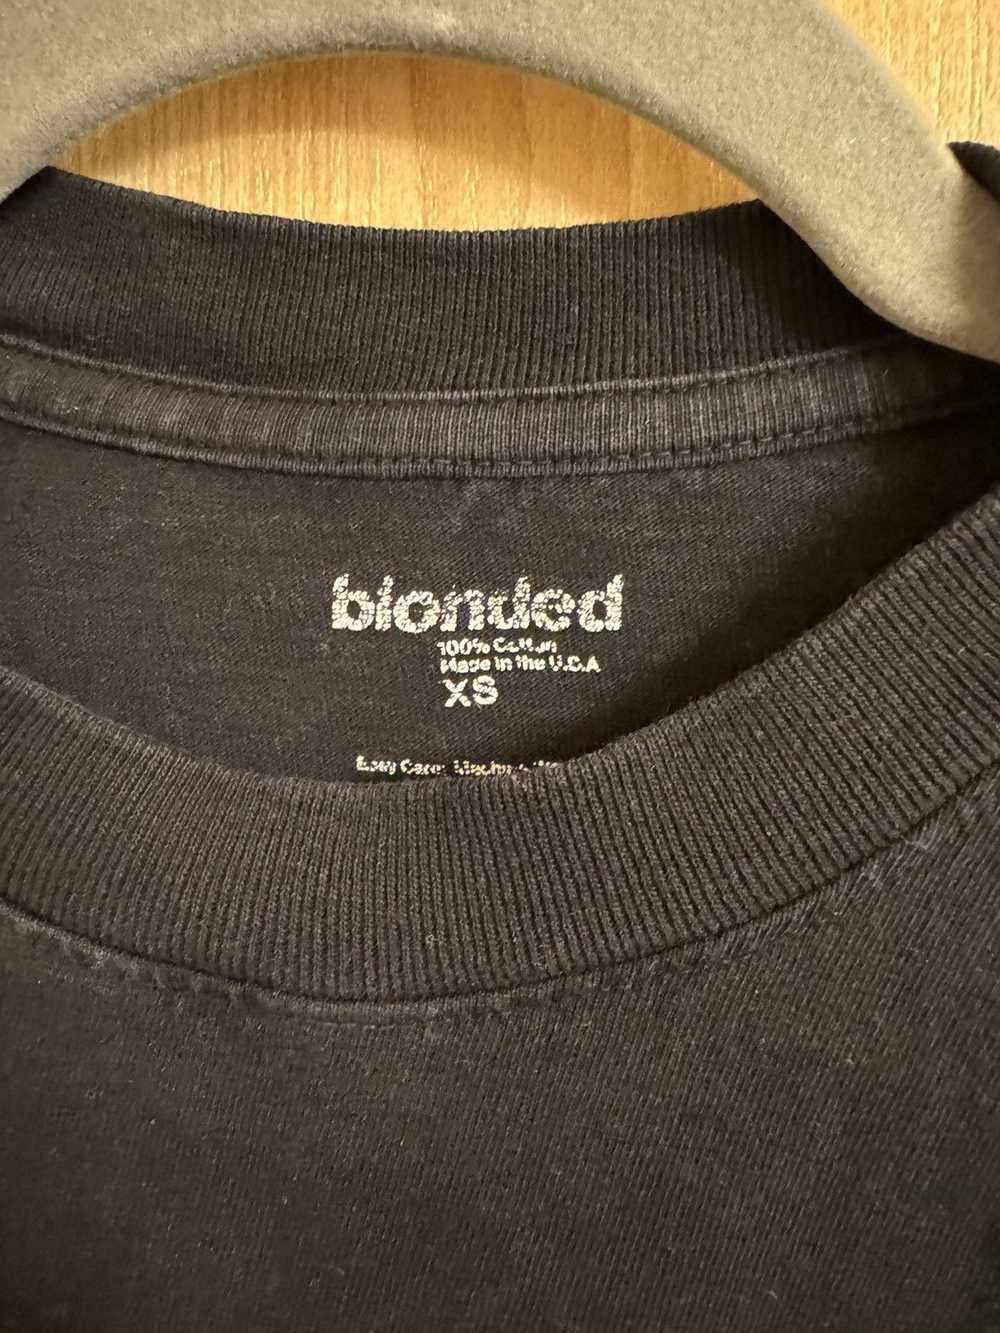 Frank Ocean Frank Ocean blonded shirt - image 3